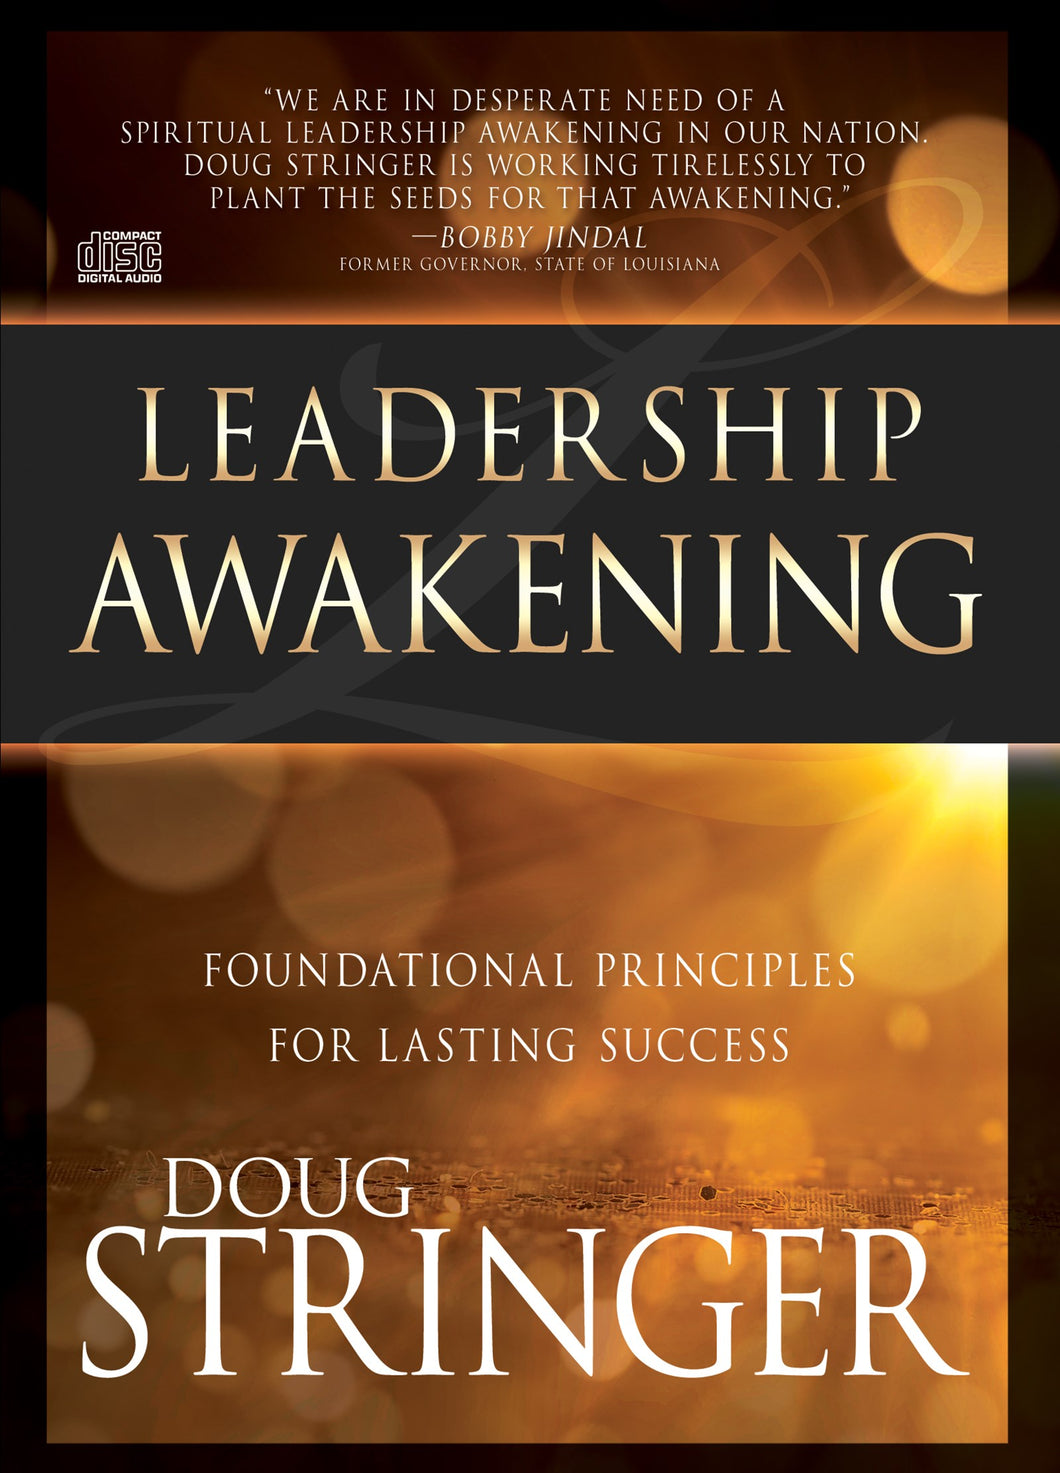 Audiobook-Audio CD-Leadership Awakening (6 CDs)